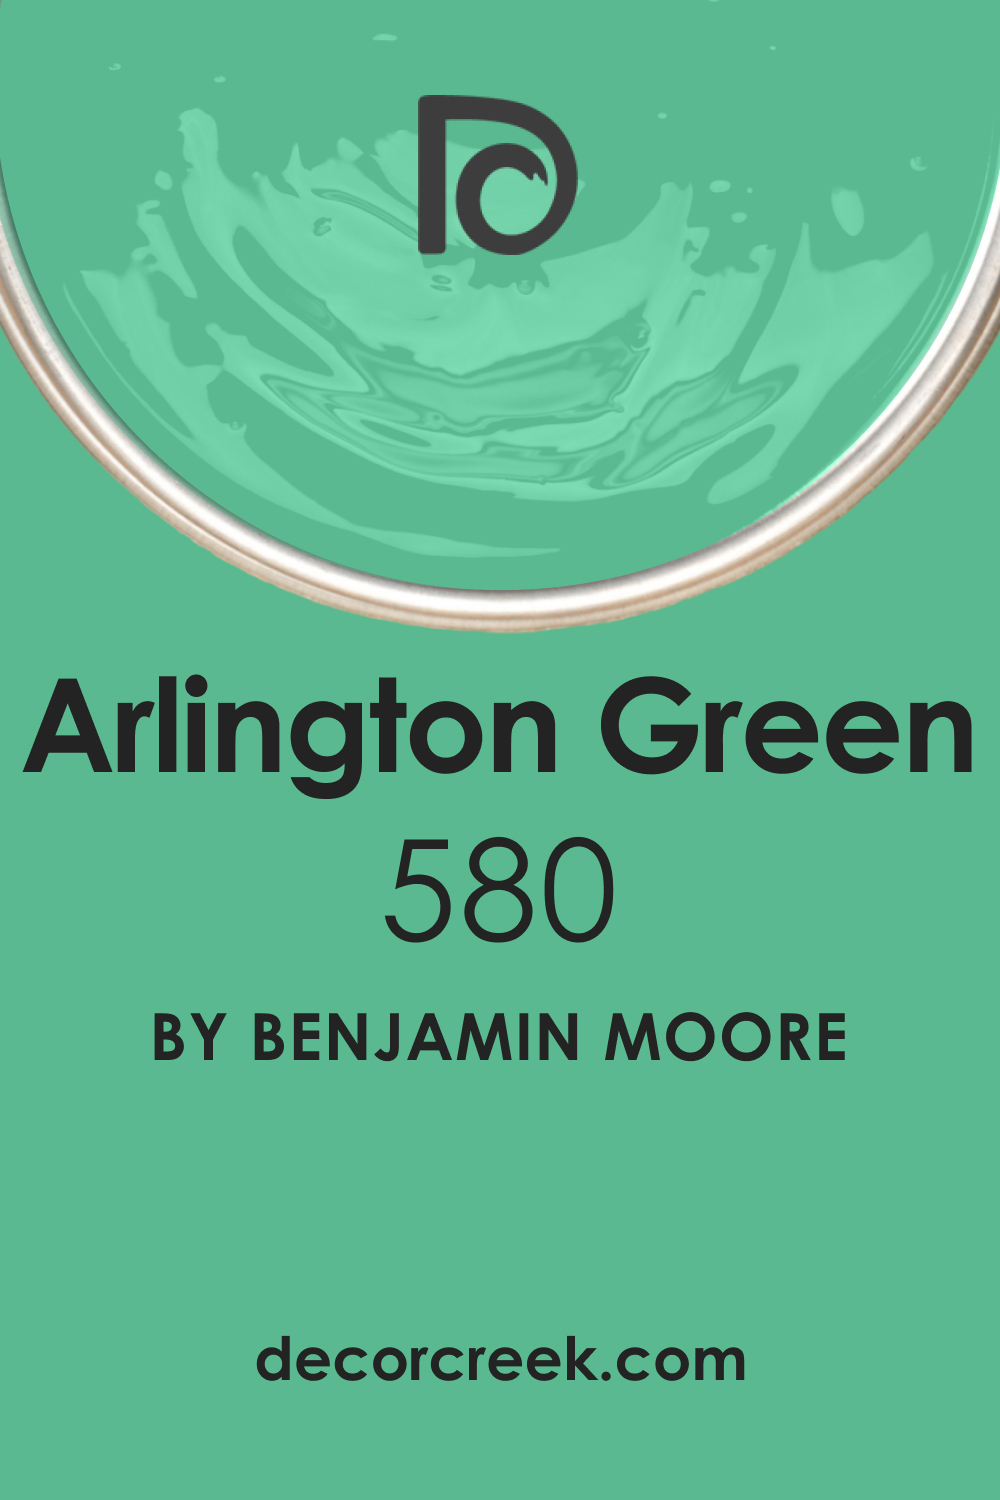 Arlington Green 580 Paint Color by Benjamin Moore